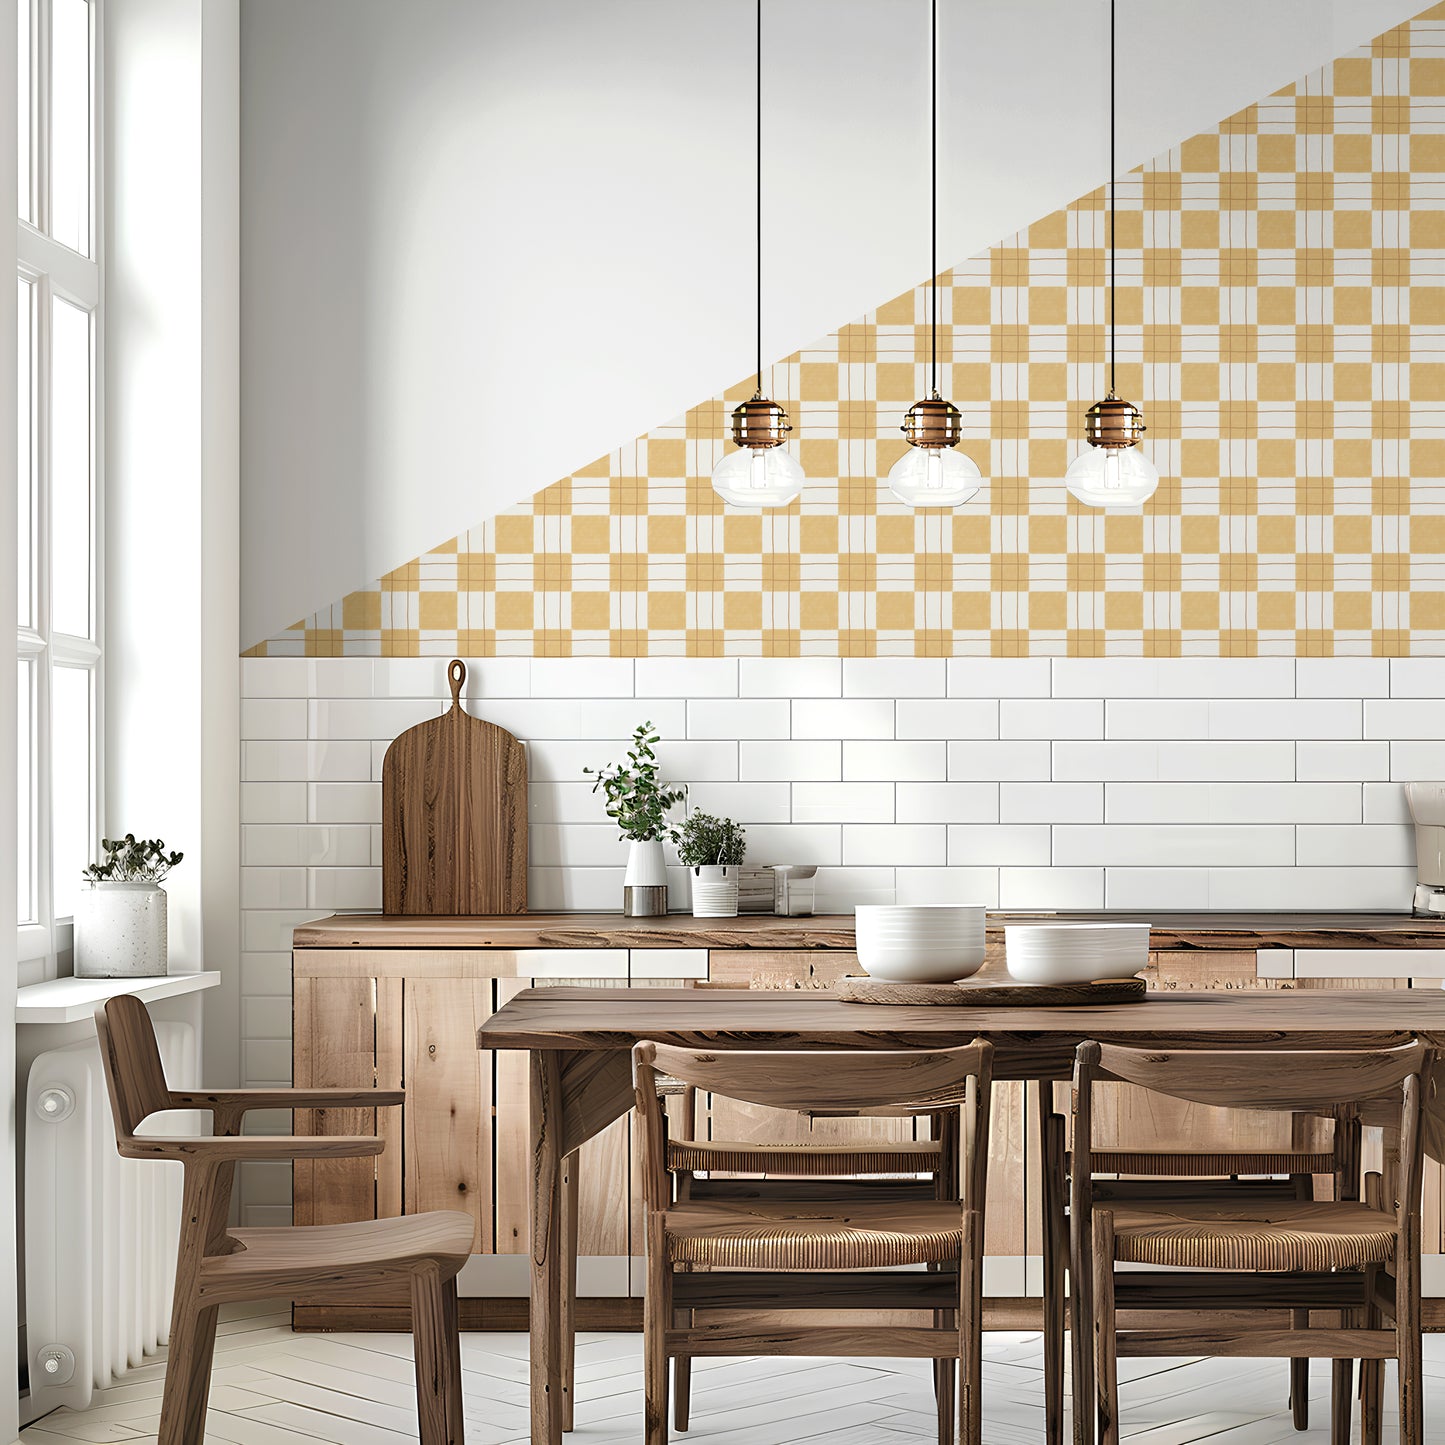 Cozy farmhouse/country house kitchen wallpaper mockup  – wallcovering interior mockup